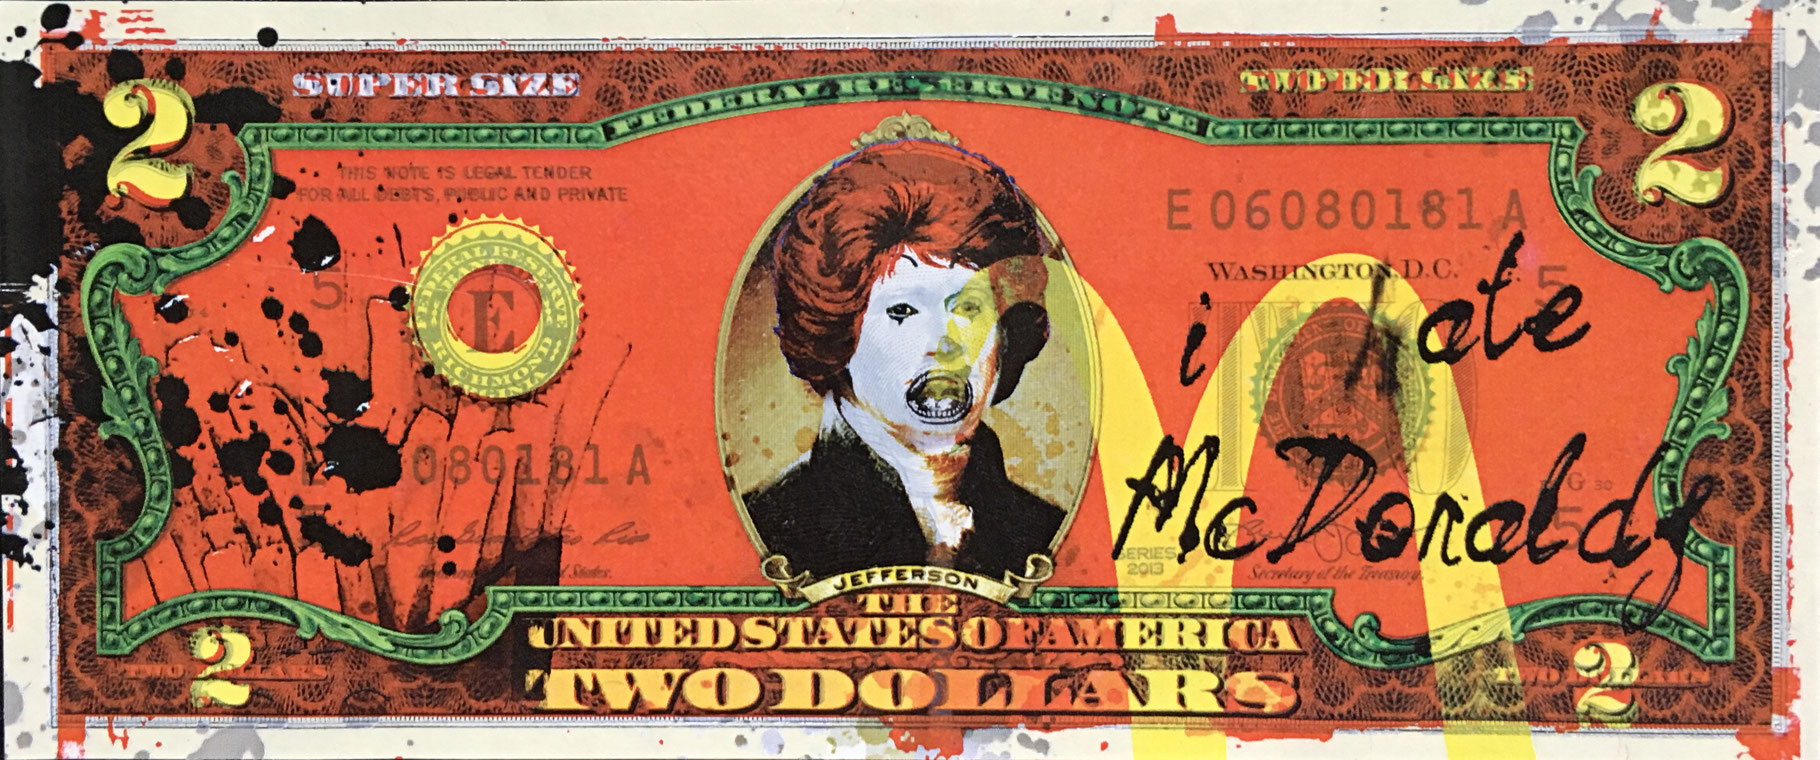 Bill Pop Art HAND-SIGNED by Rency GAME OF THRONES Genuine Legal Tender $2 U.S 